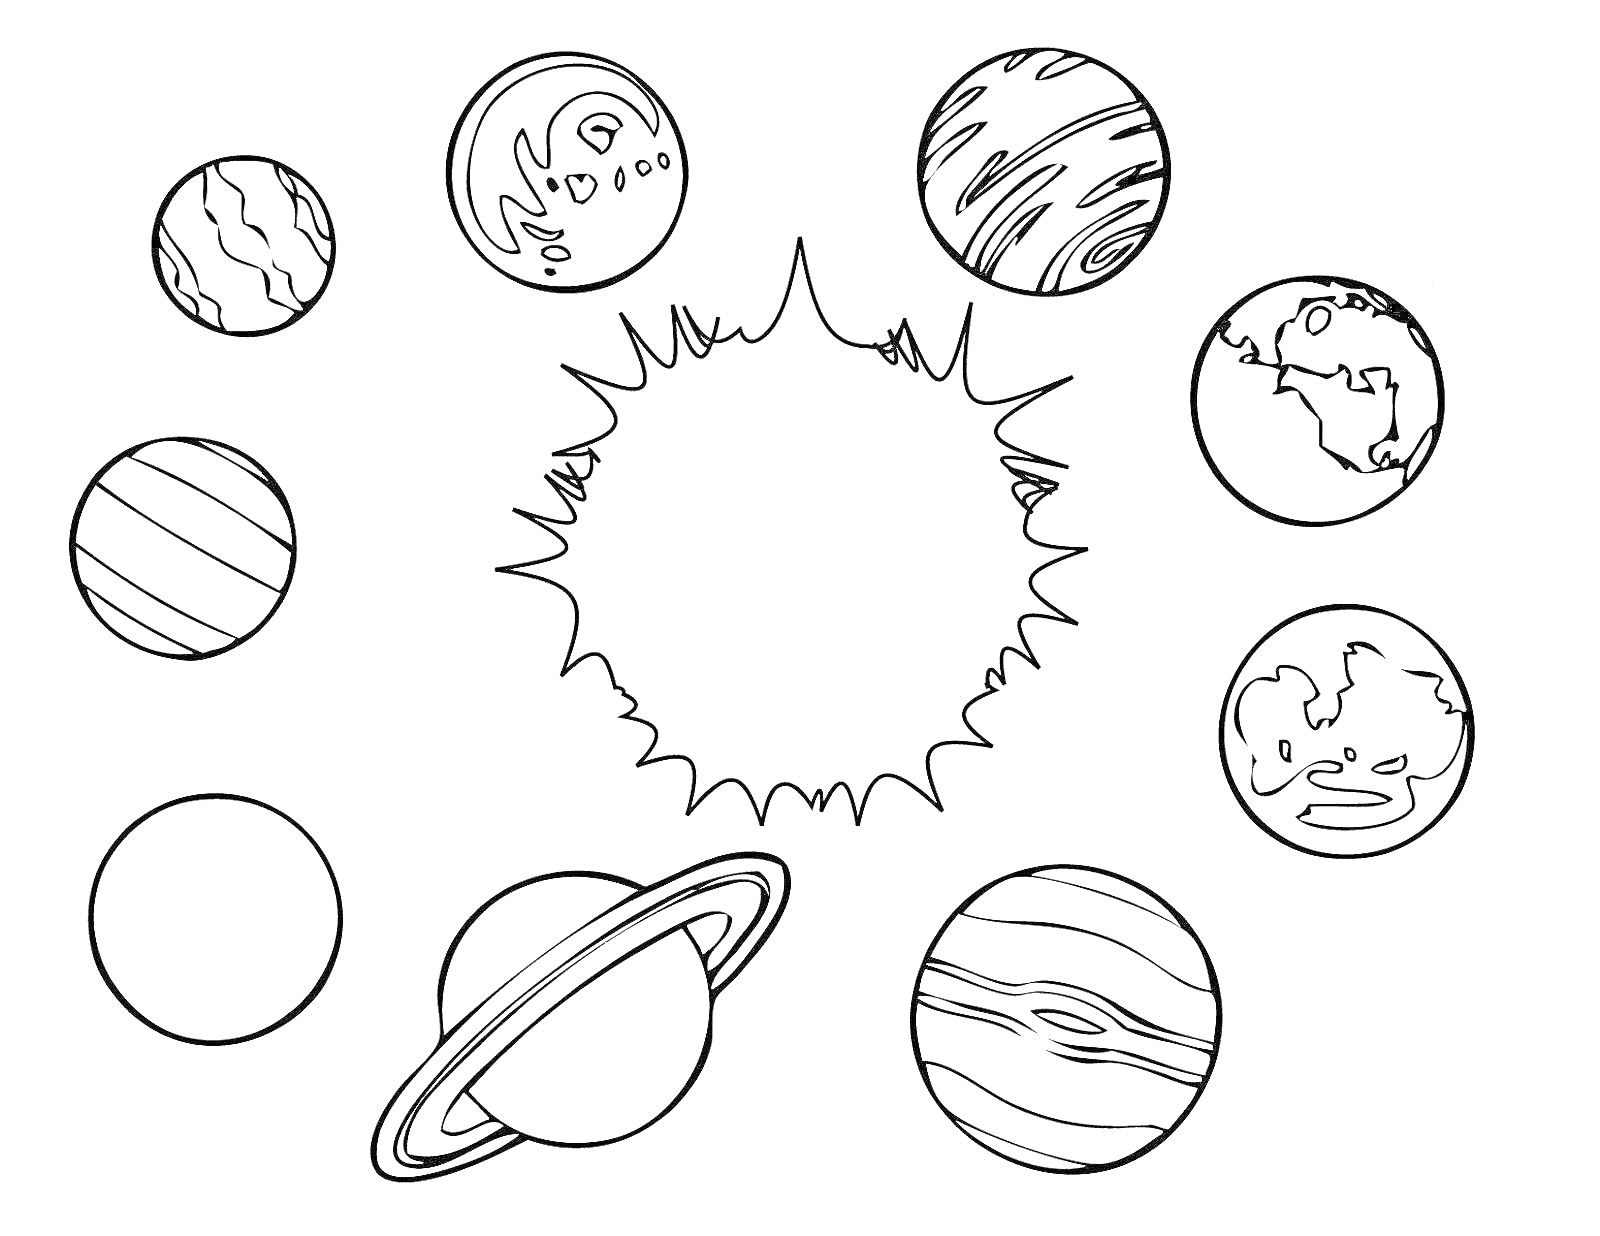 Солнечная система со всеми планетами